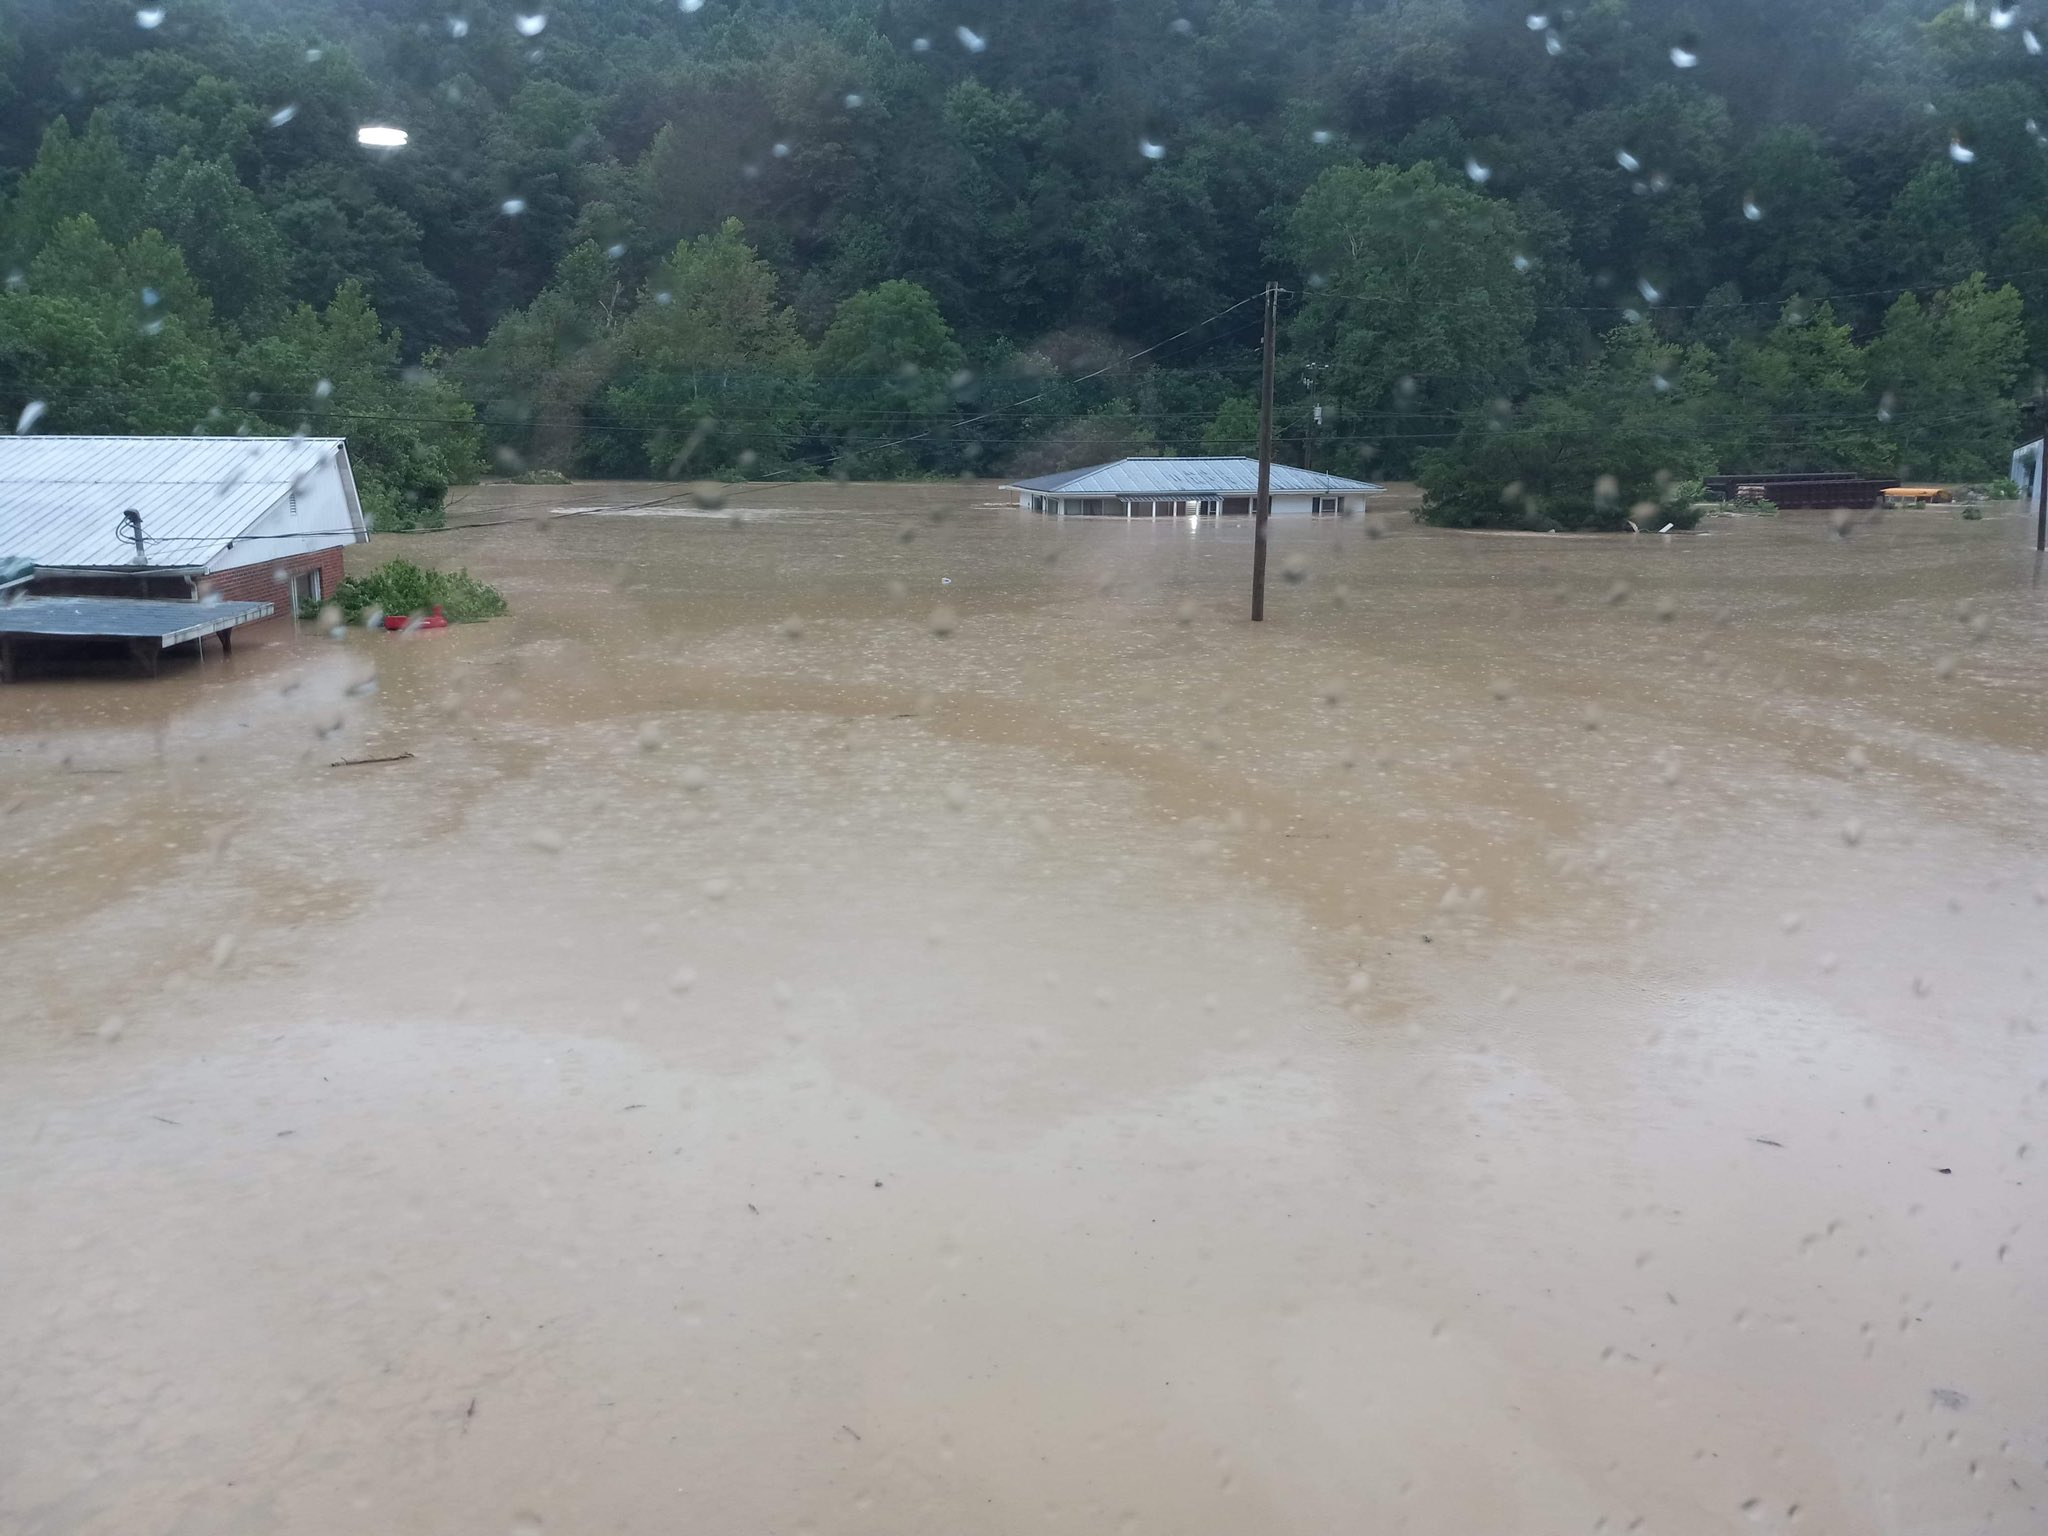 Flash flooding on Hwy 476 at Hwy 15 in Breathitt County, KY